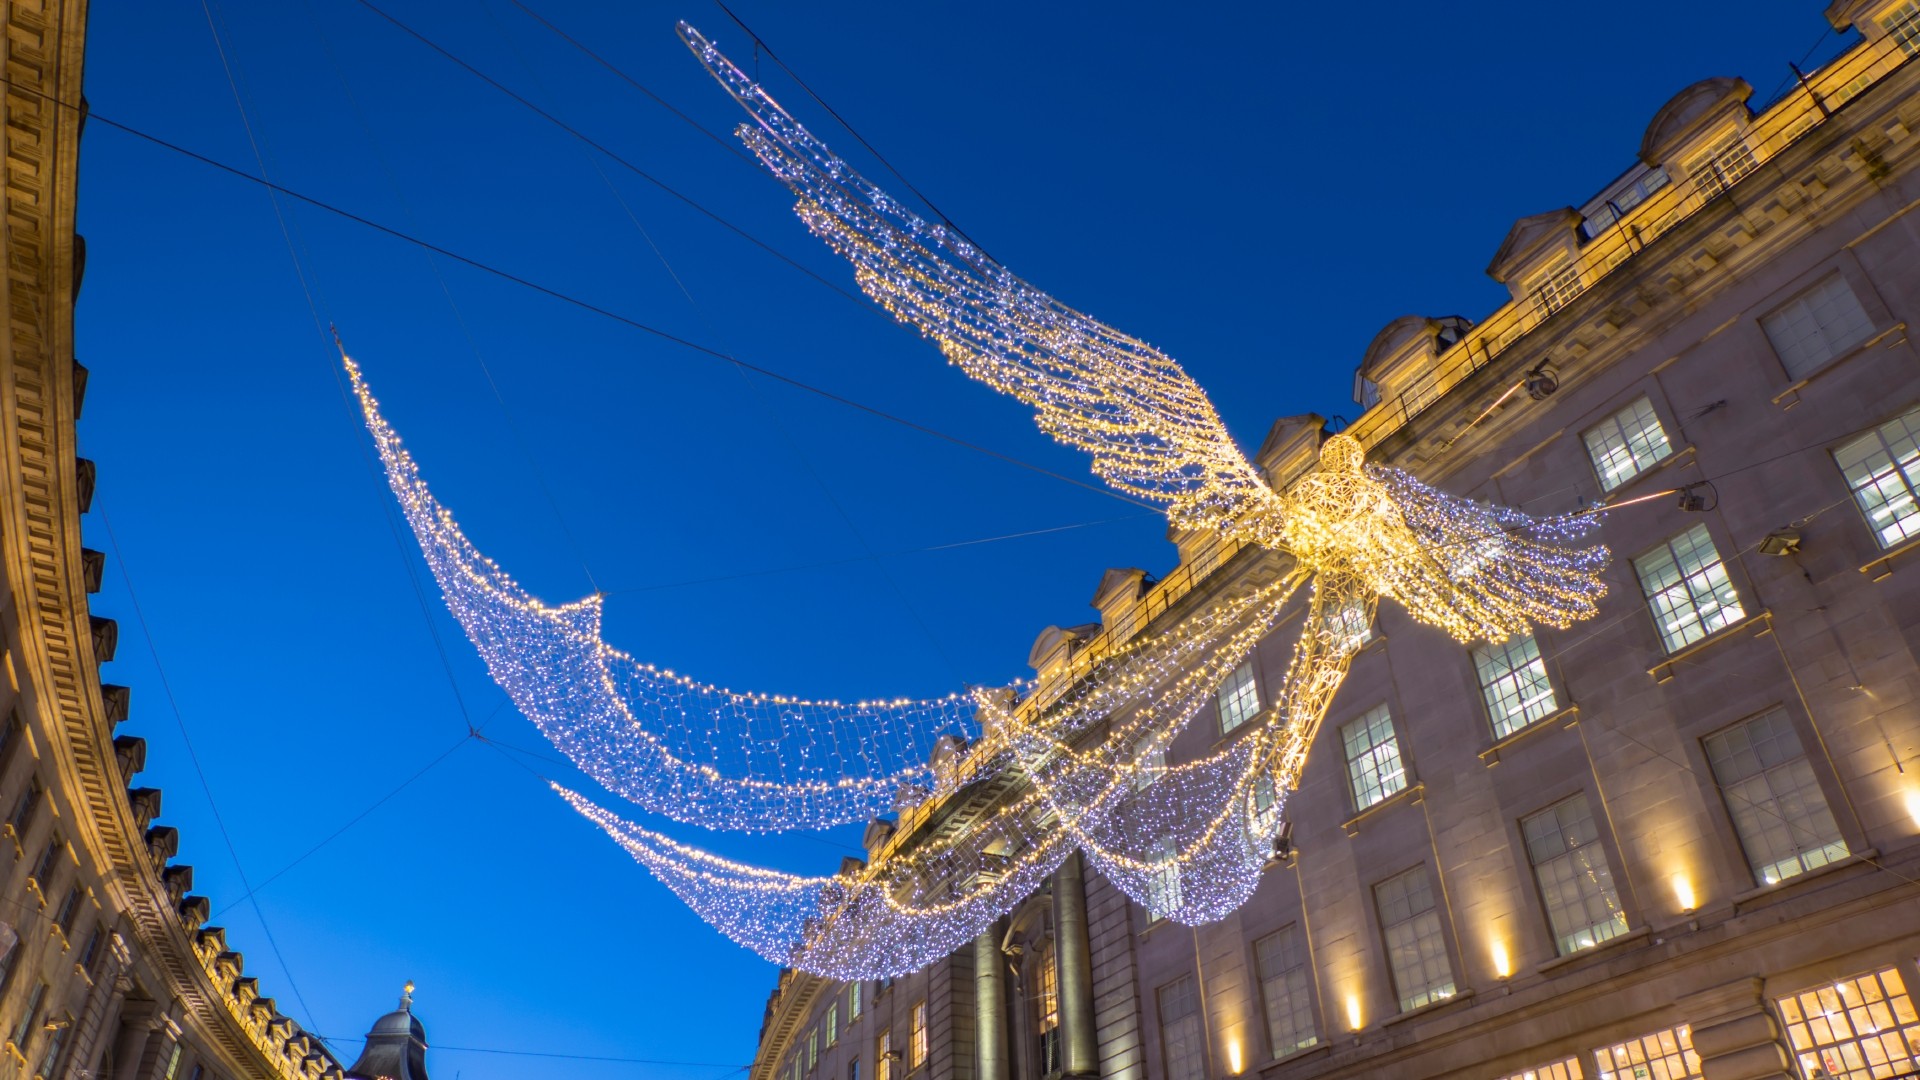 Angel-like Christmas decorations lighting up Regent Street.